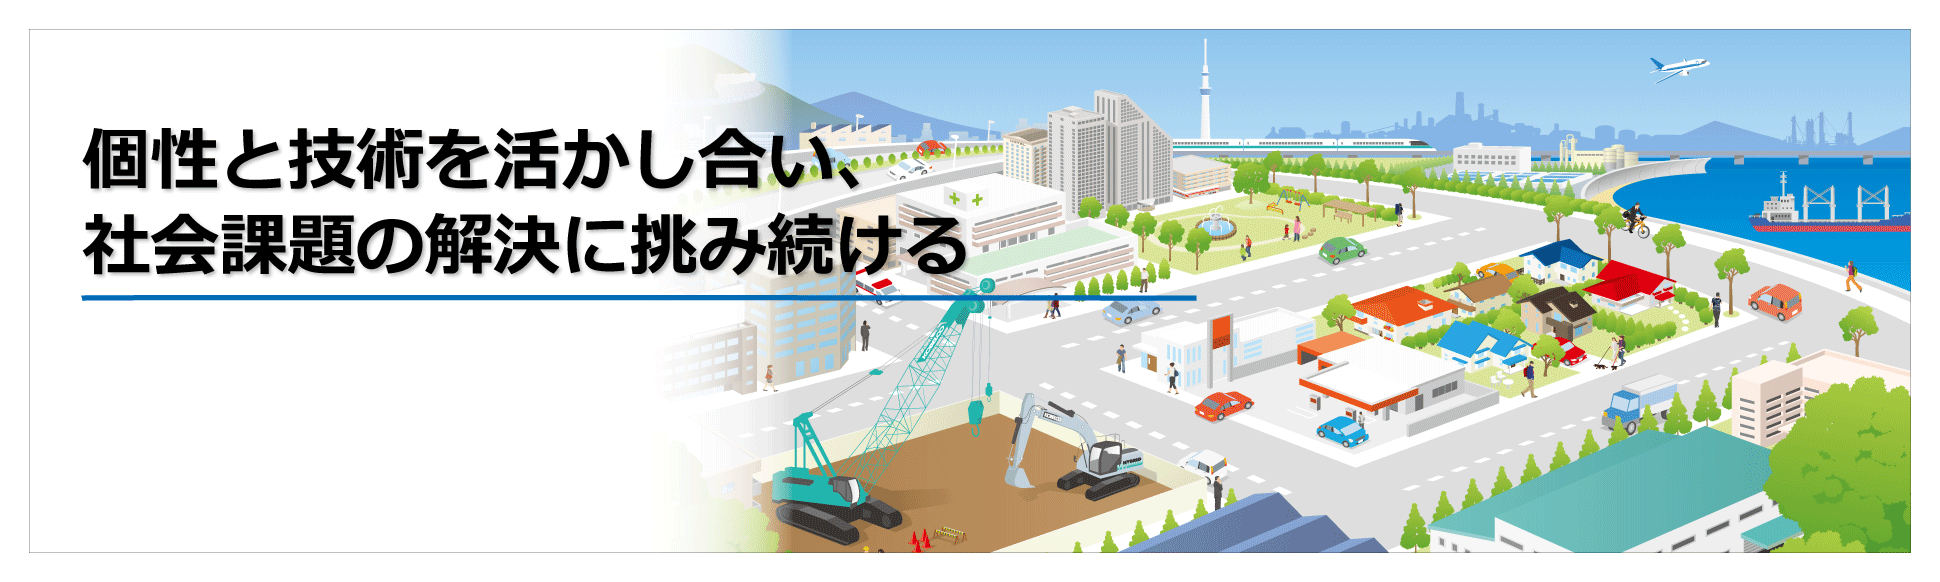 KOBELCO SOLUTIONS & TECHNOLOGIES　くるまづくりに貢献する神戸製鋼グループ